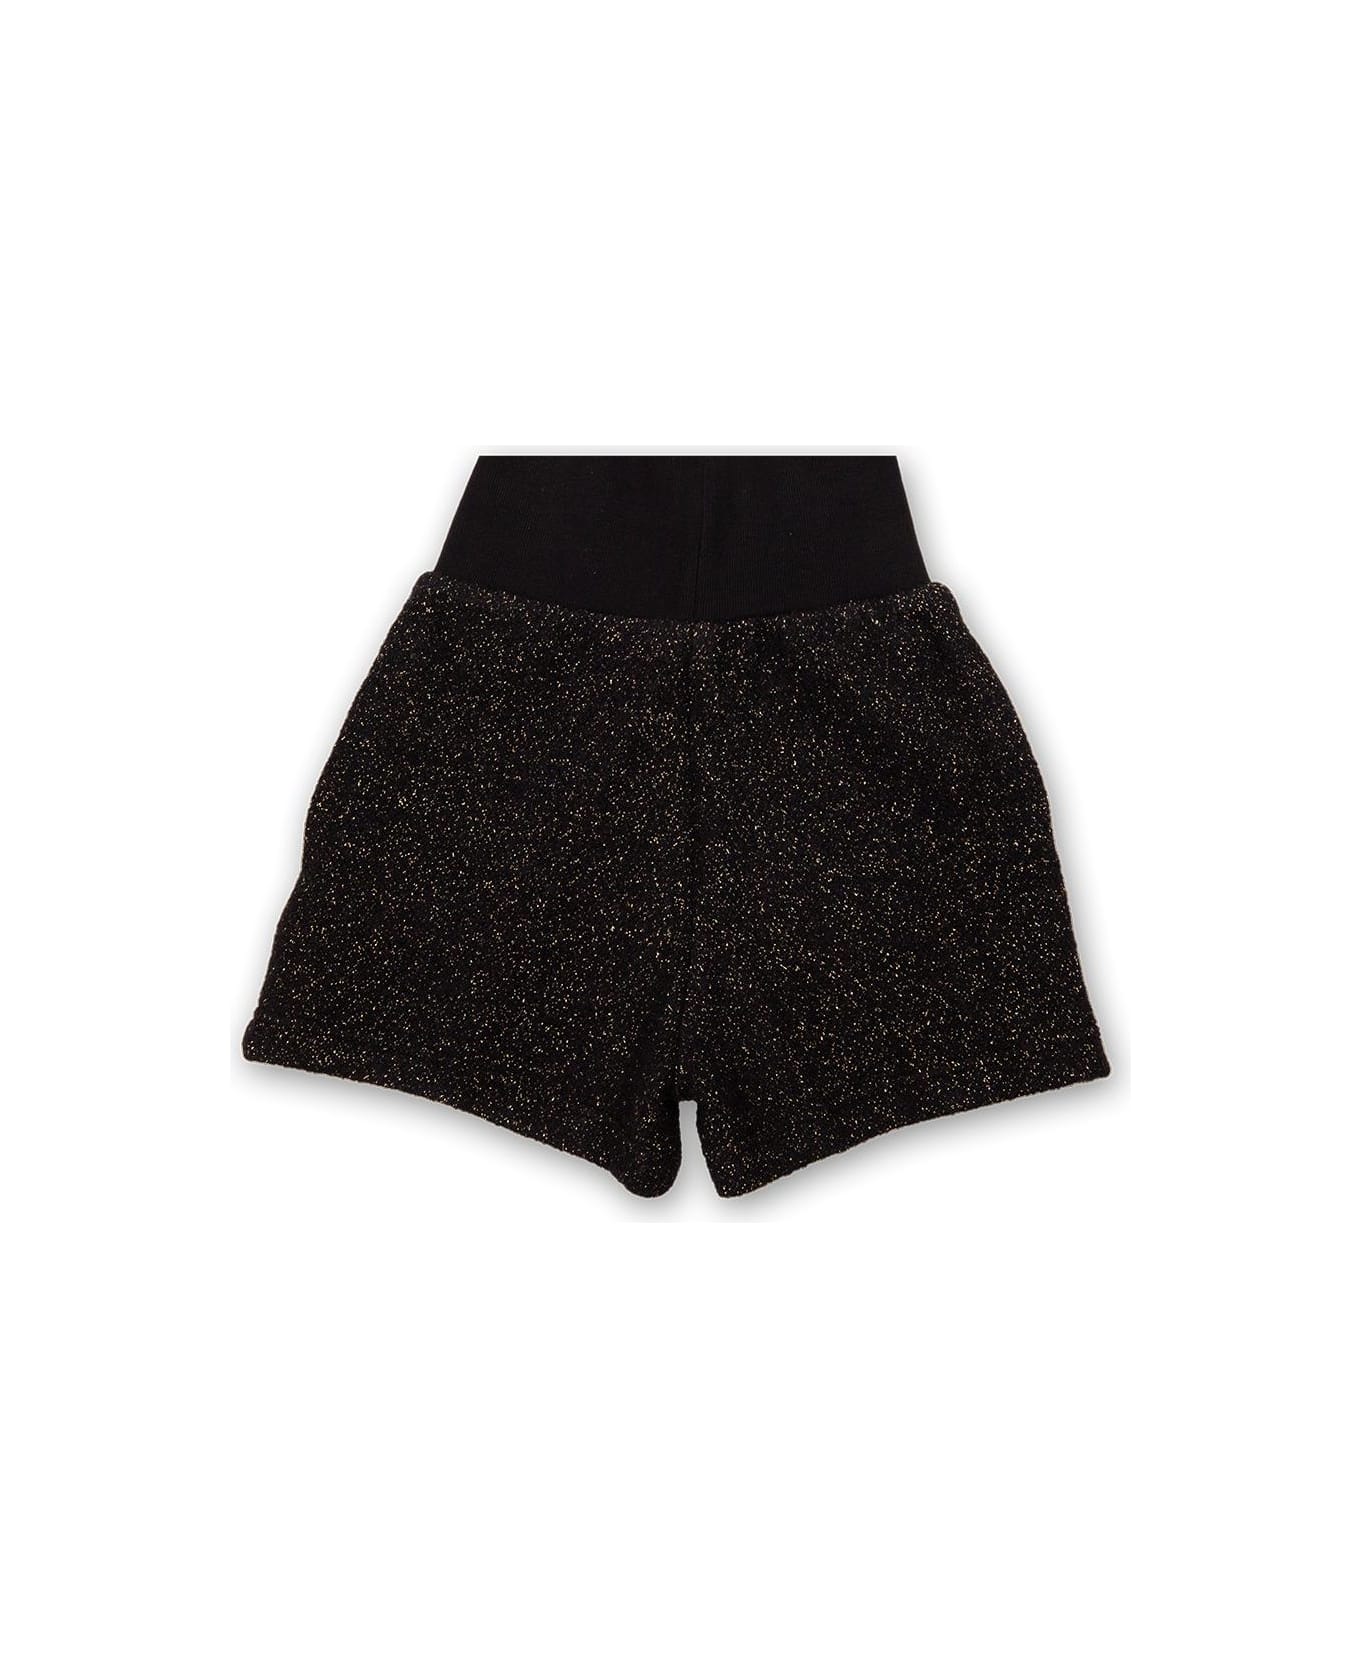 Balmain Lurex Shorts - Black/gold